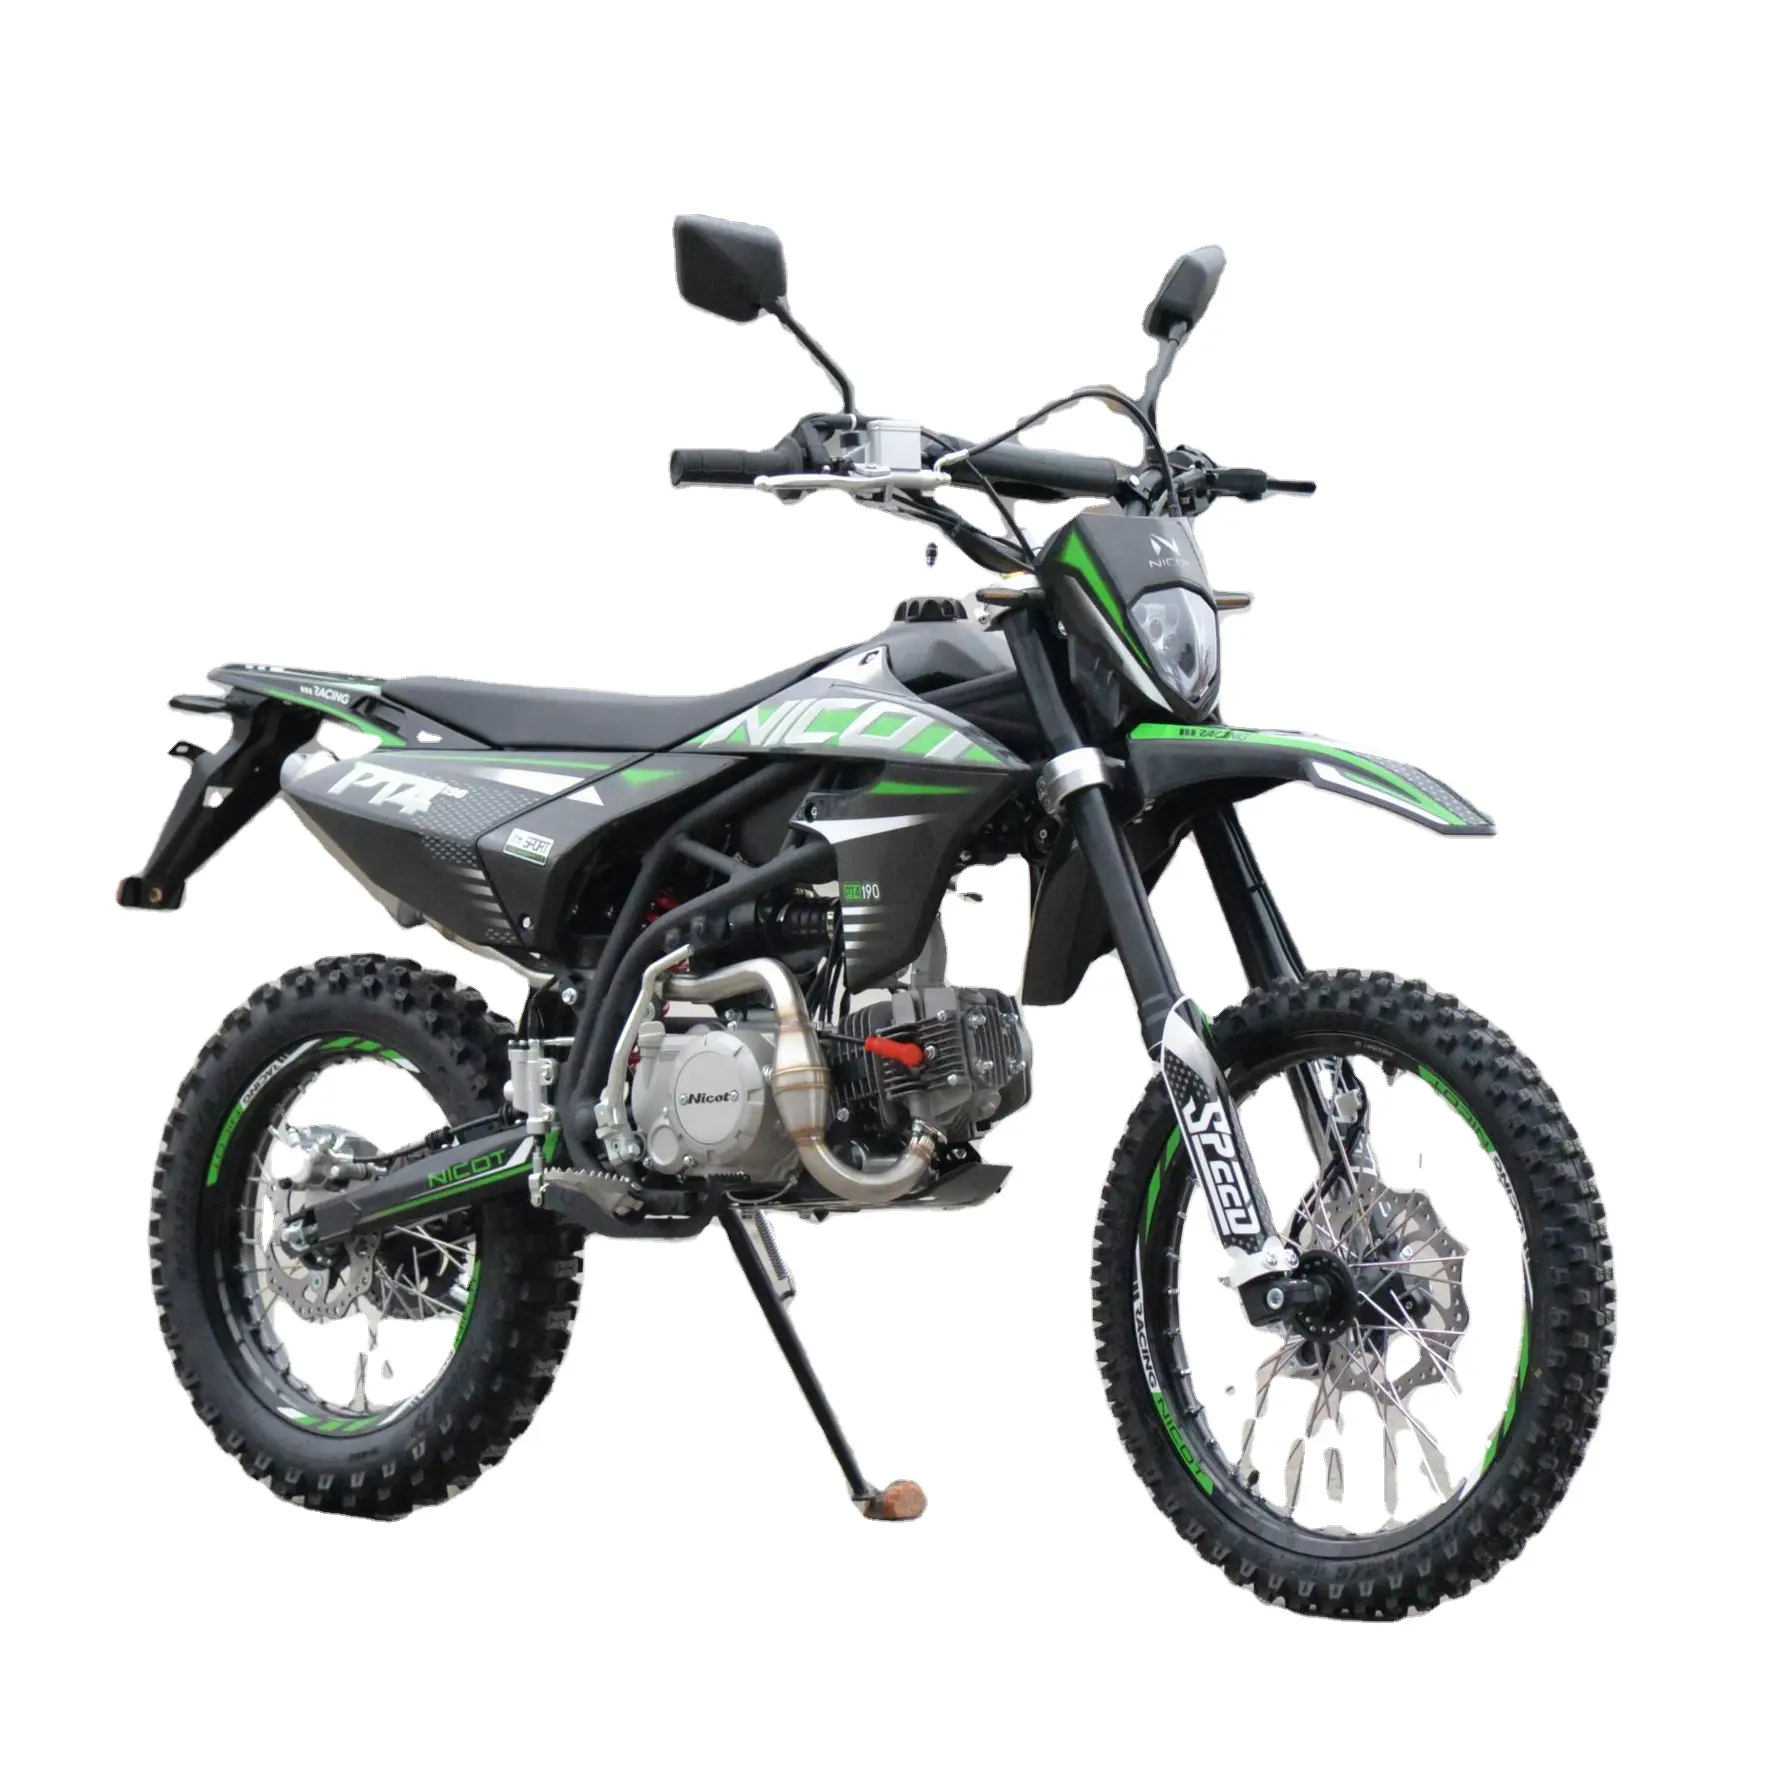 Nicot Moto 150cc Gasoline Dirt Bike Off-road Motorcycles For Adult Enduro Racing Dirt Bike